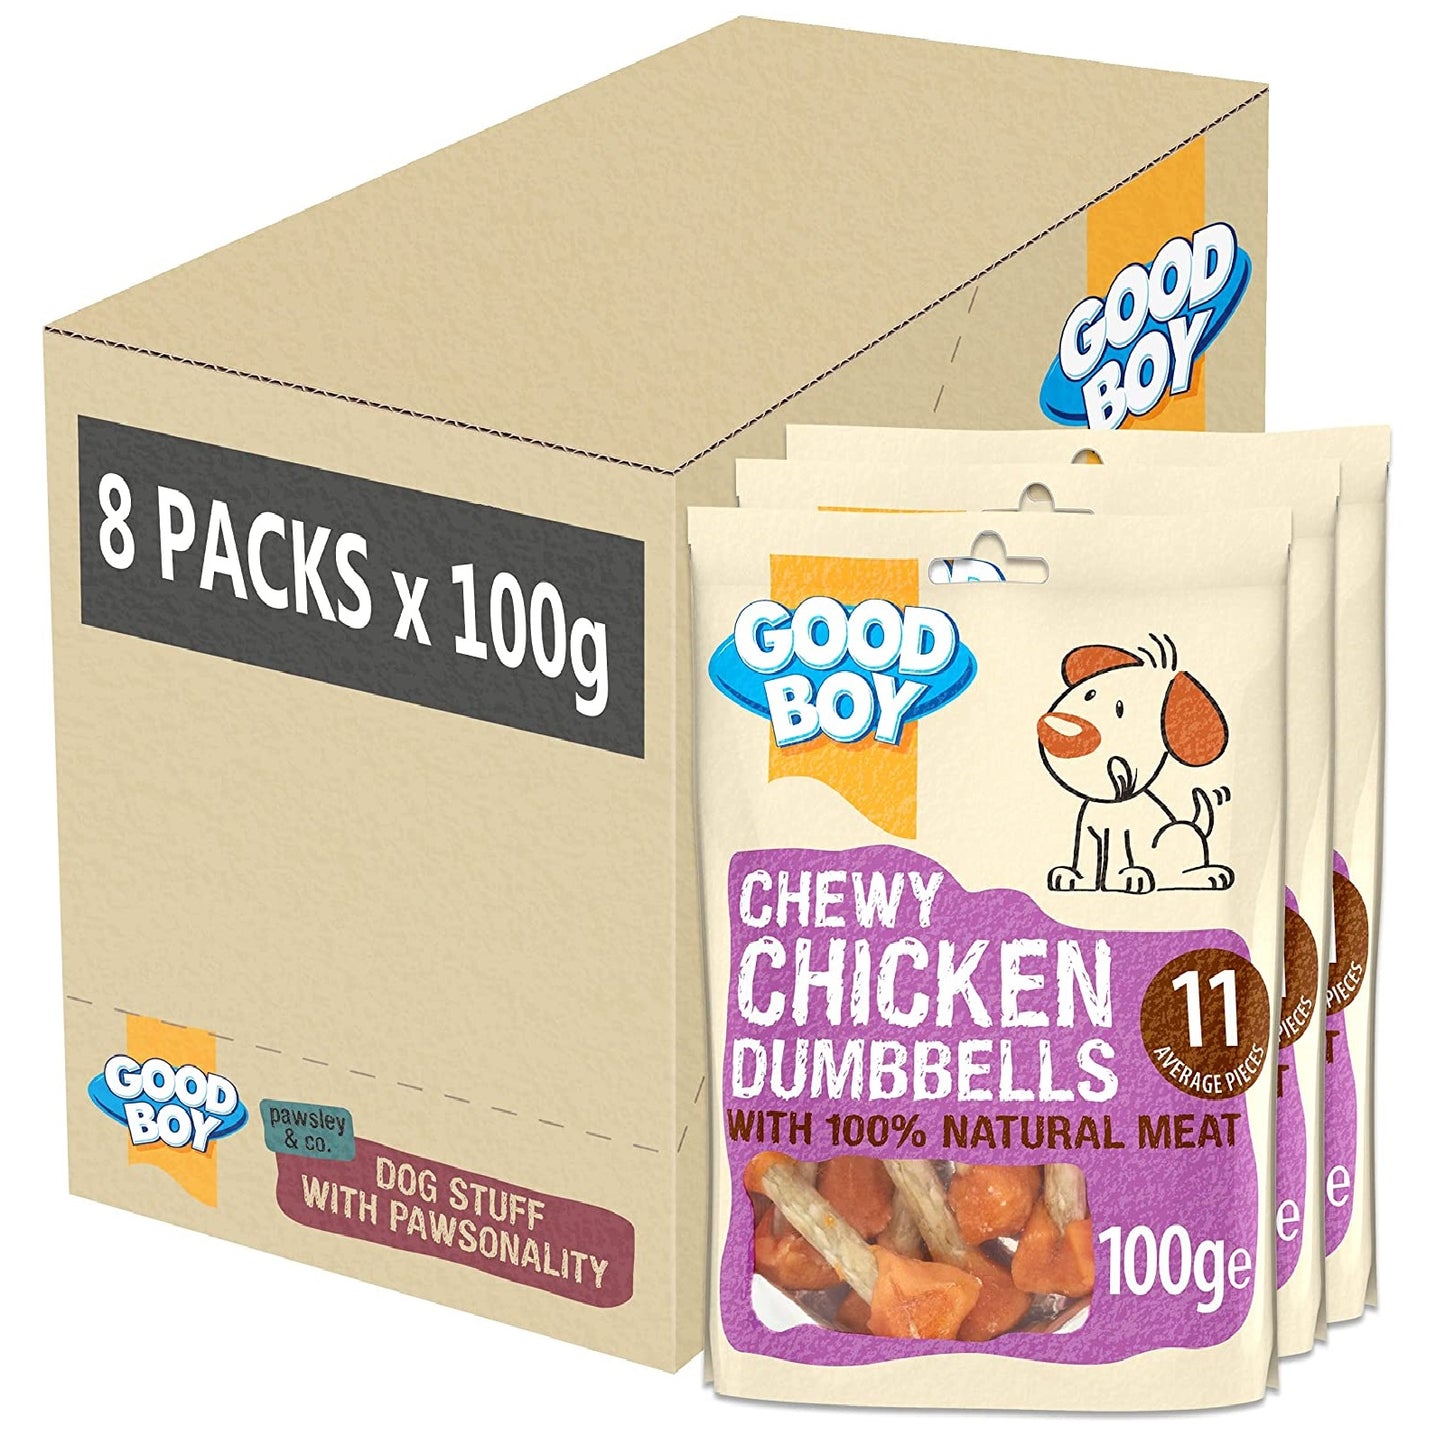 Good Boy - Chewy Chicken Dumbbells (100g)